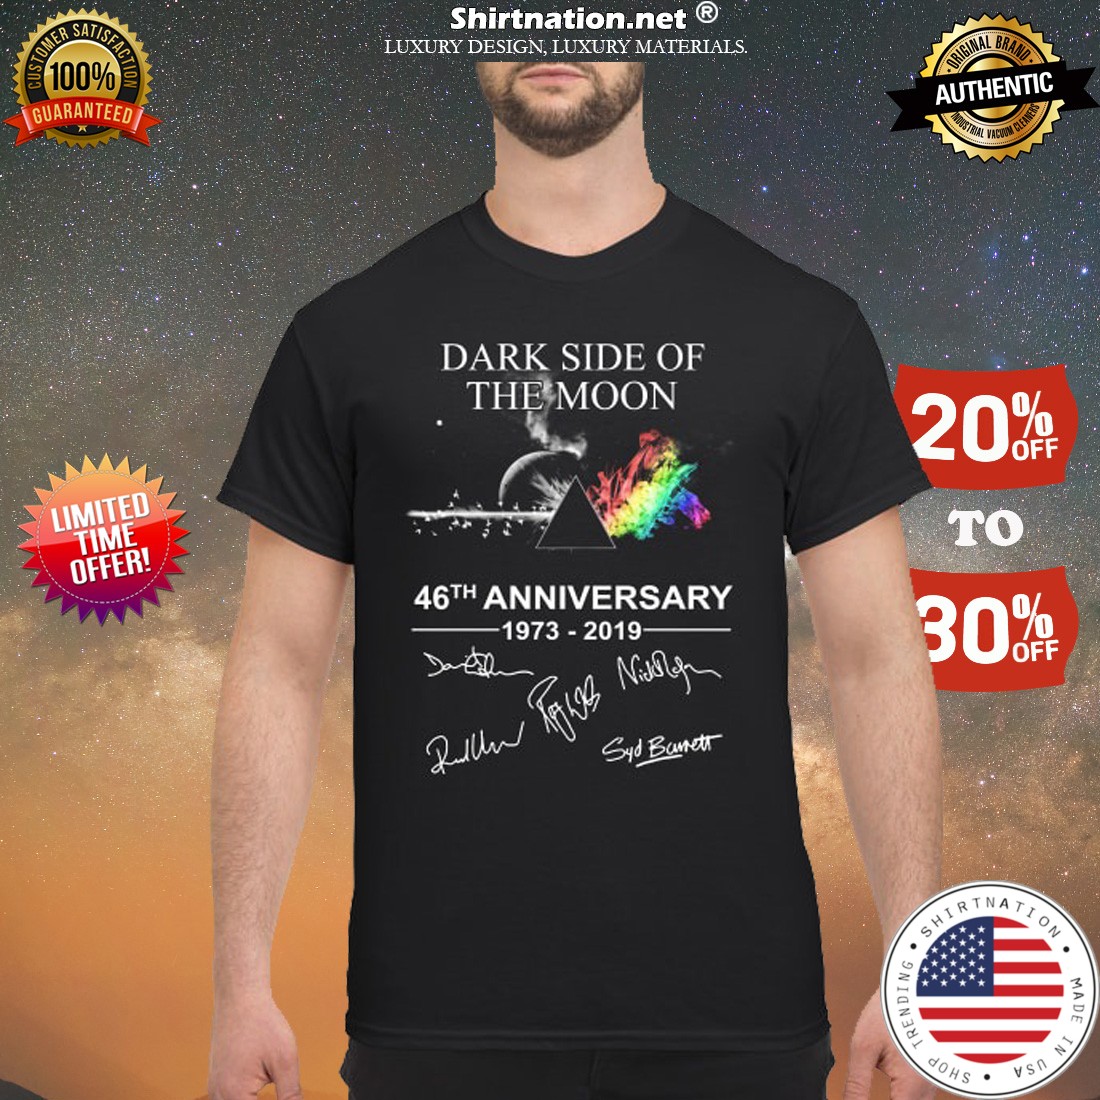 Dark side of the moon 46th anniversary shirt